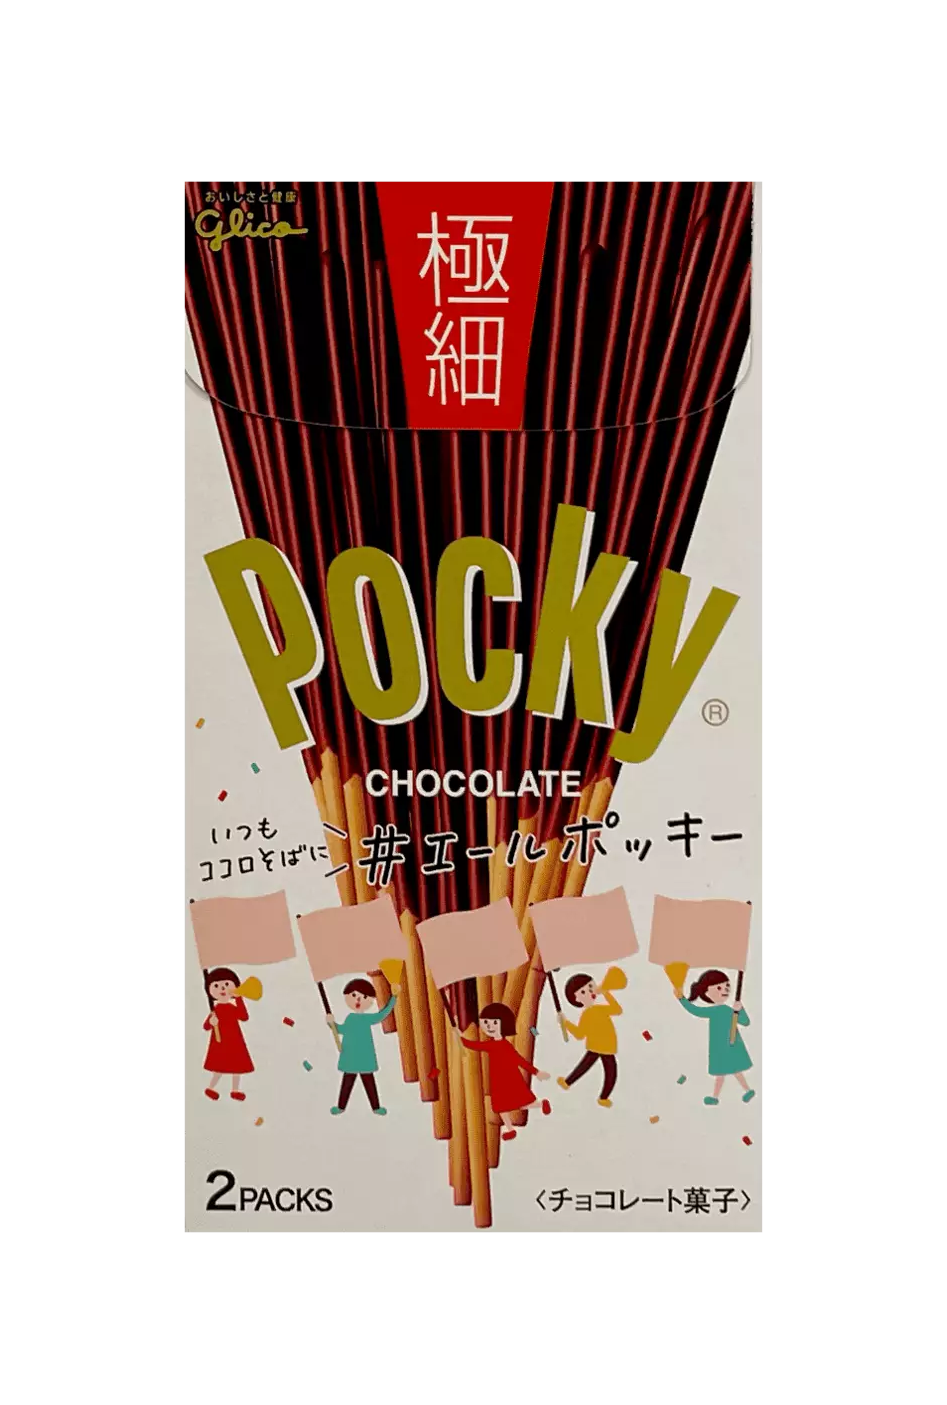 Pocky 巧克力风味 超细棒 75,4g 日本